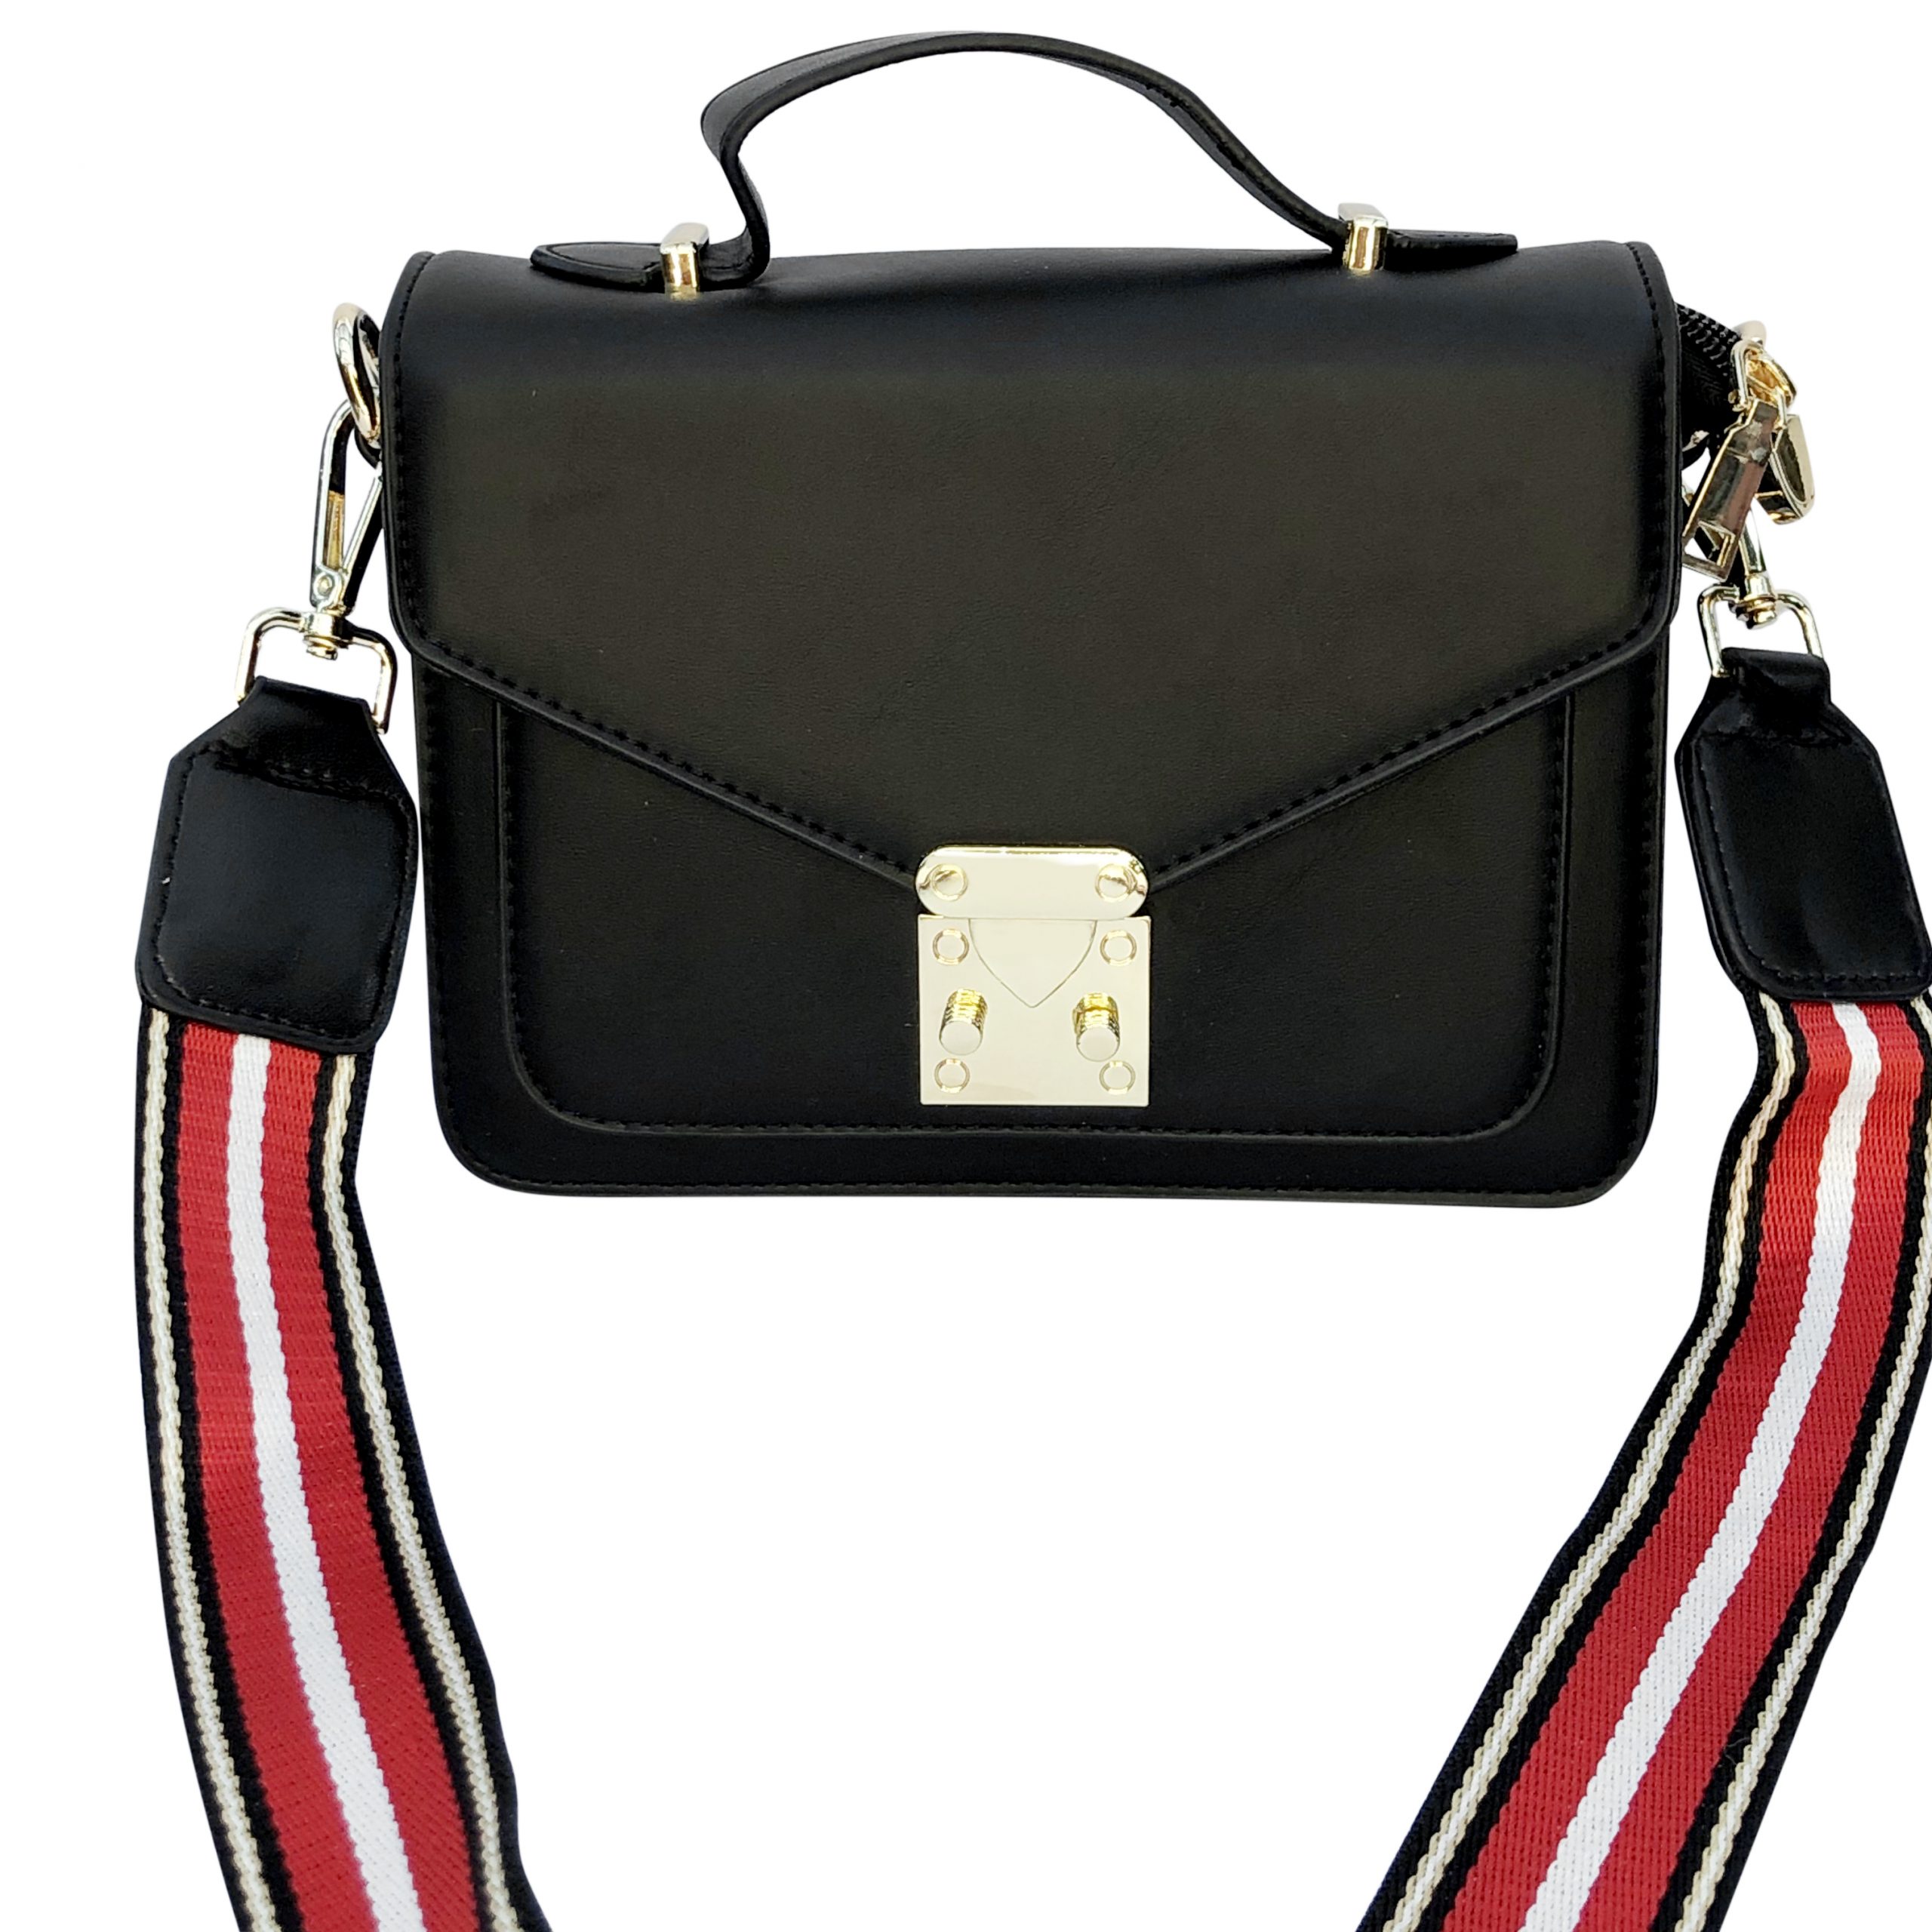 Small Black Bag|Olivia |Jeanette Maree|Shop Online Now